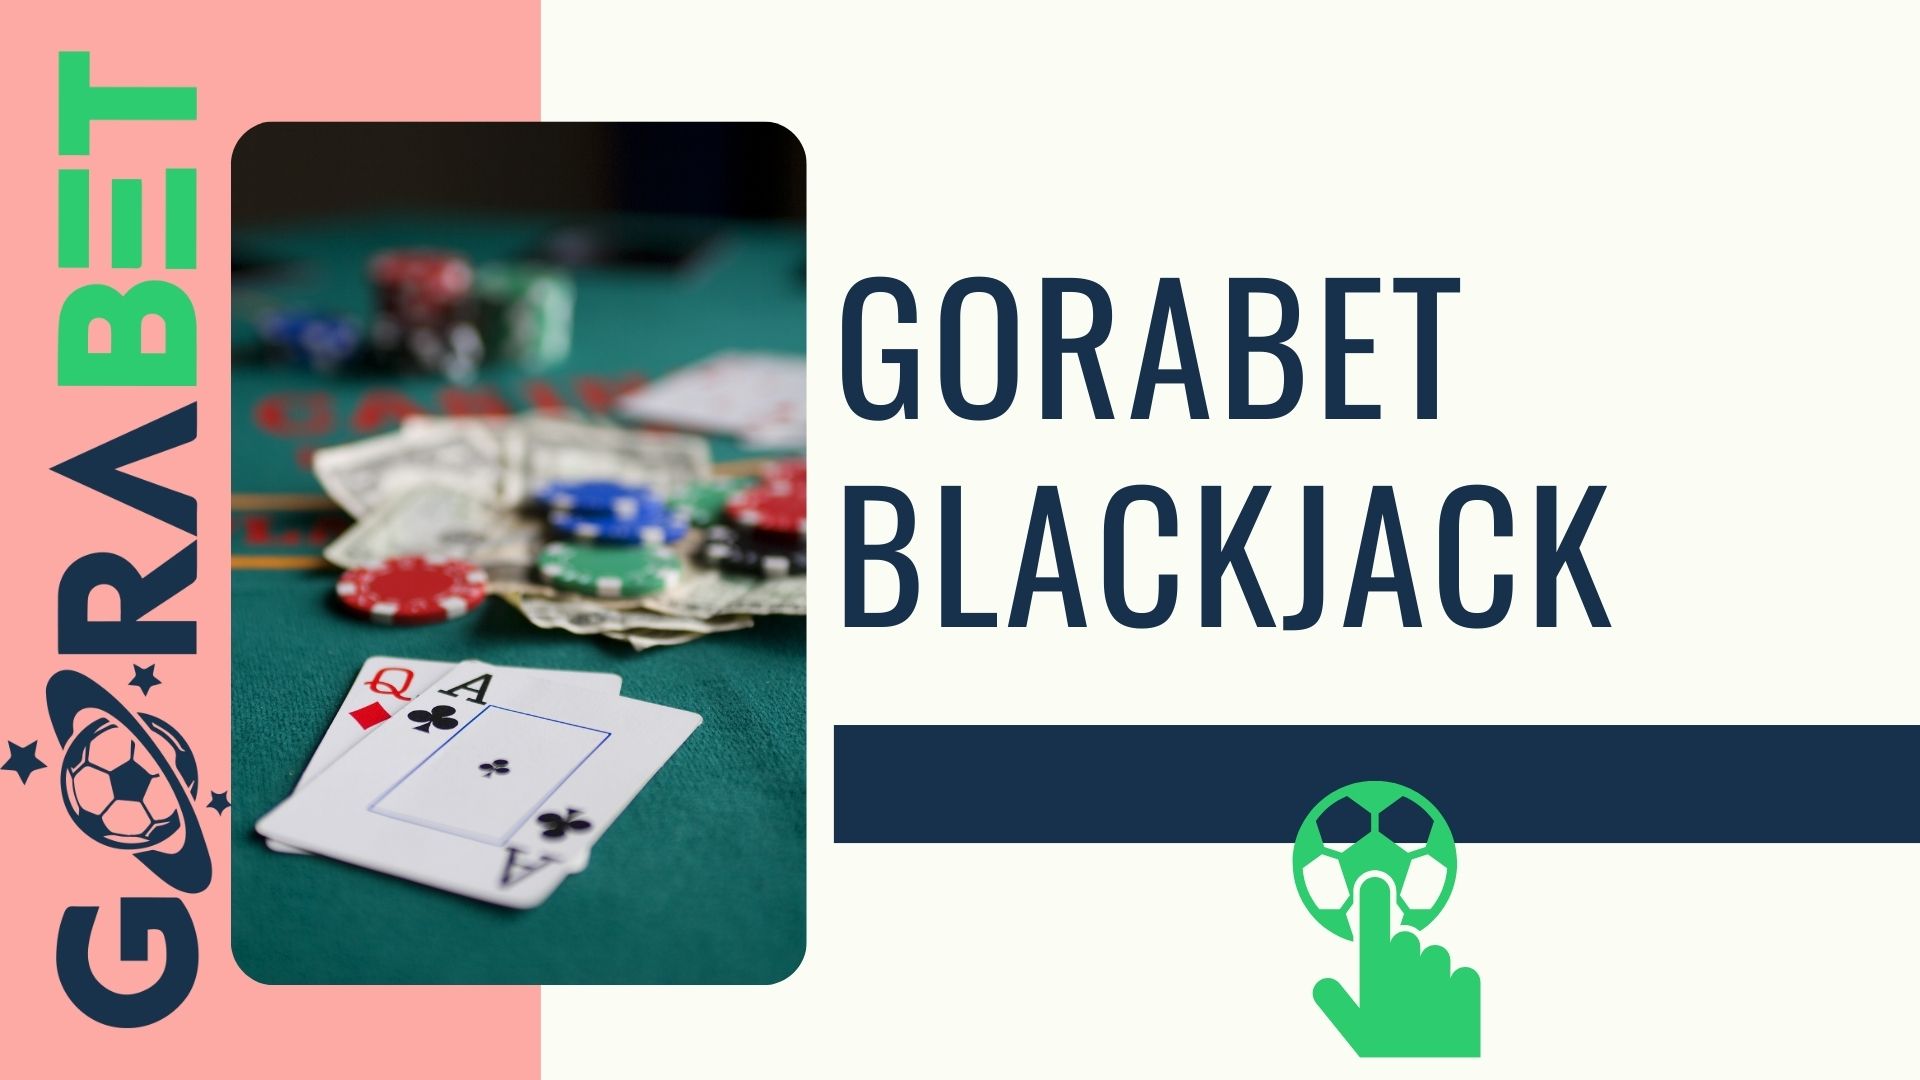 Gorabet Blackjack